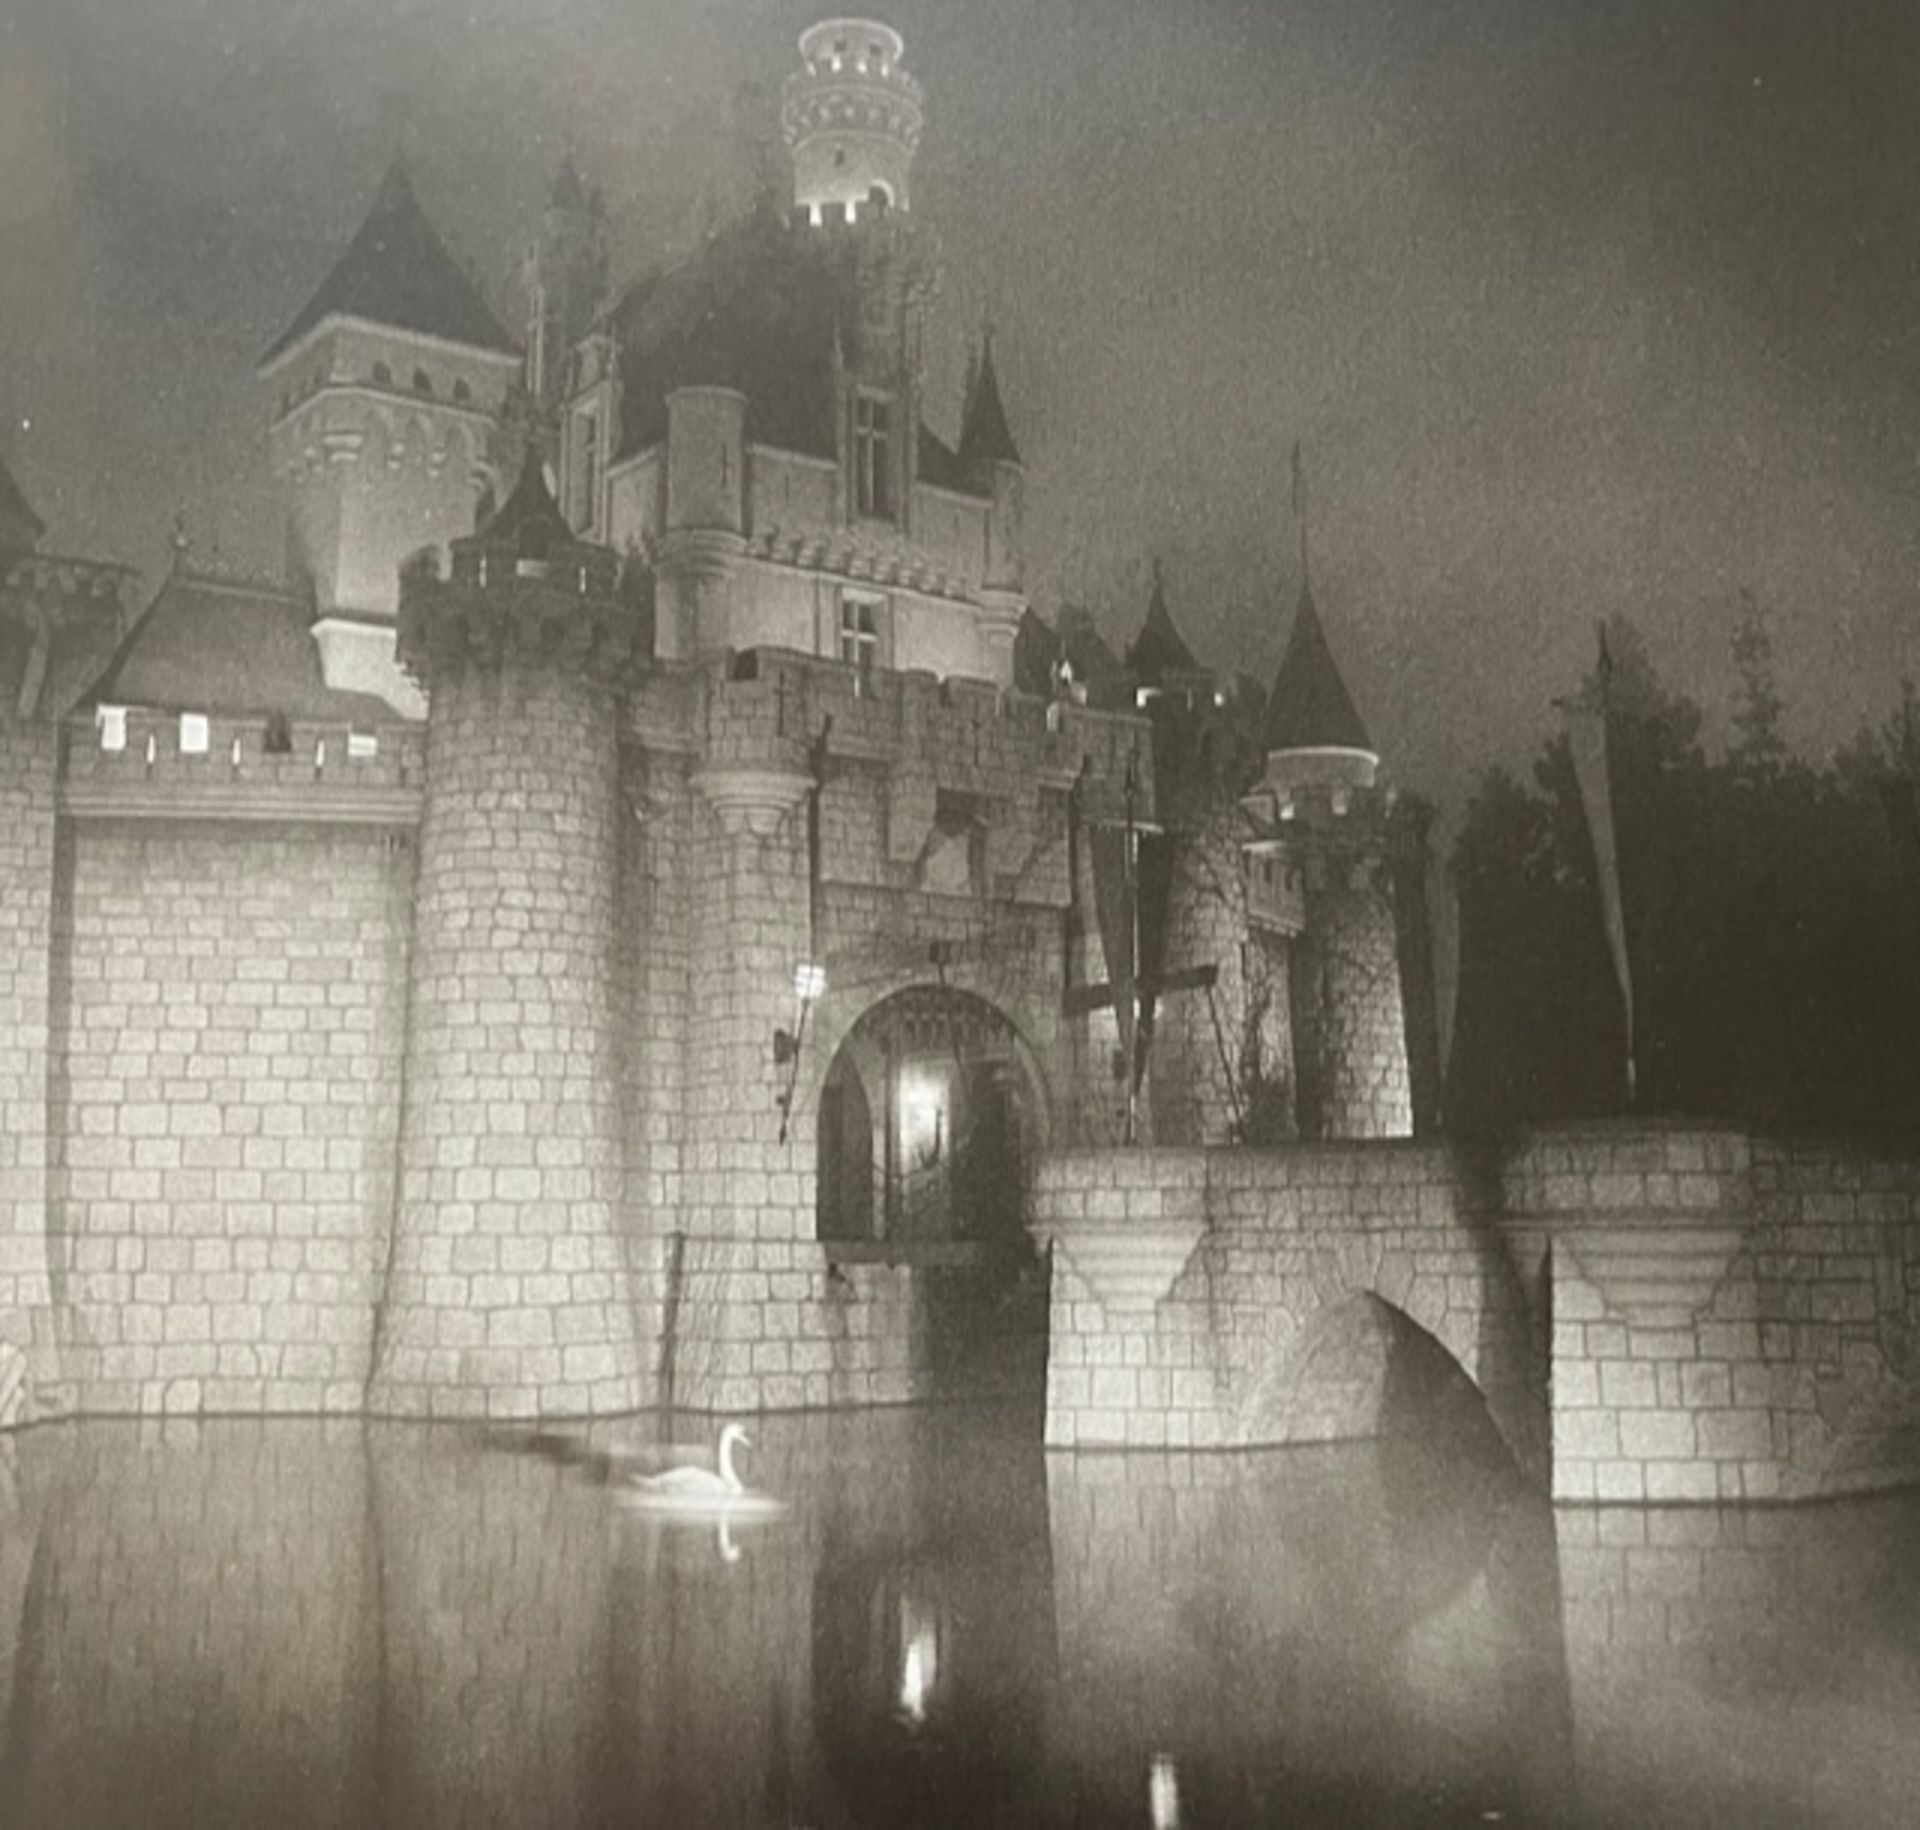 Diane Arbus "A castle in Disneyland" Print.